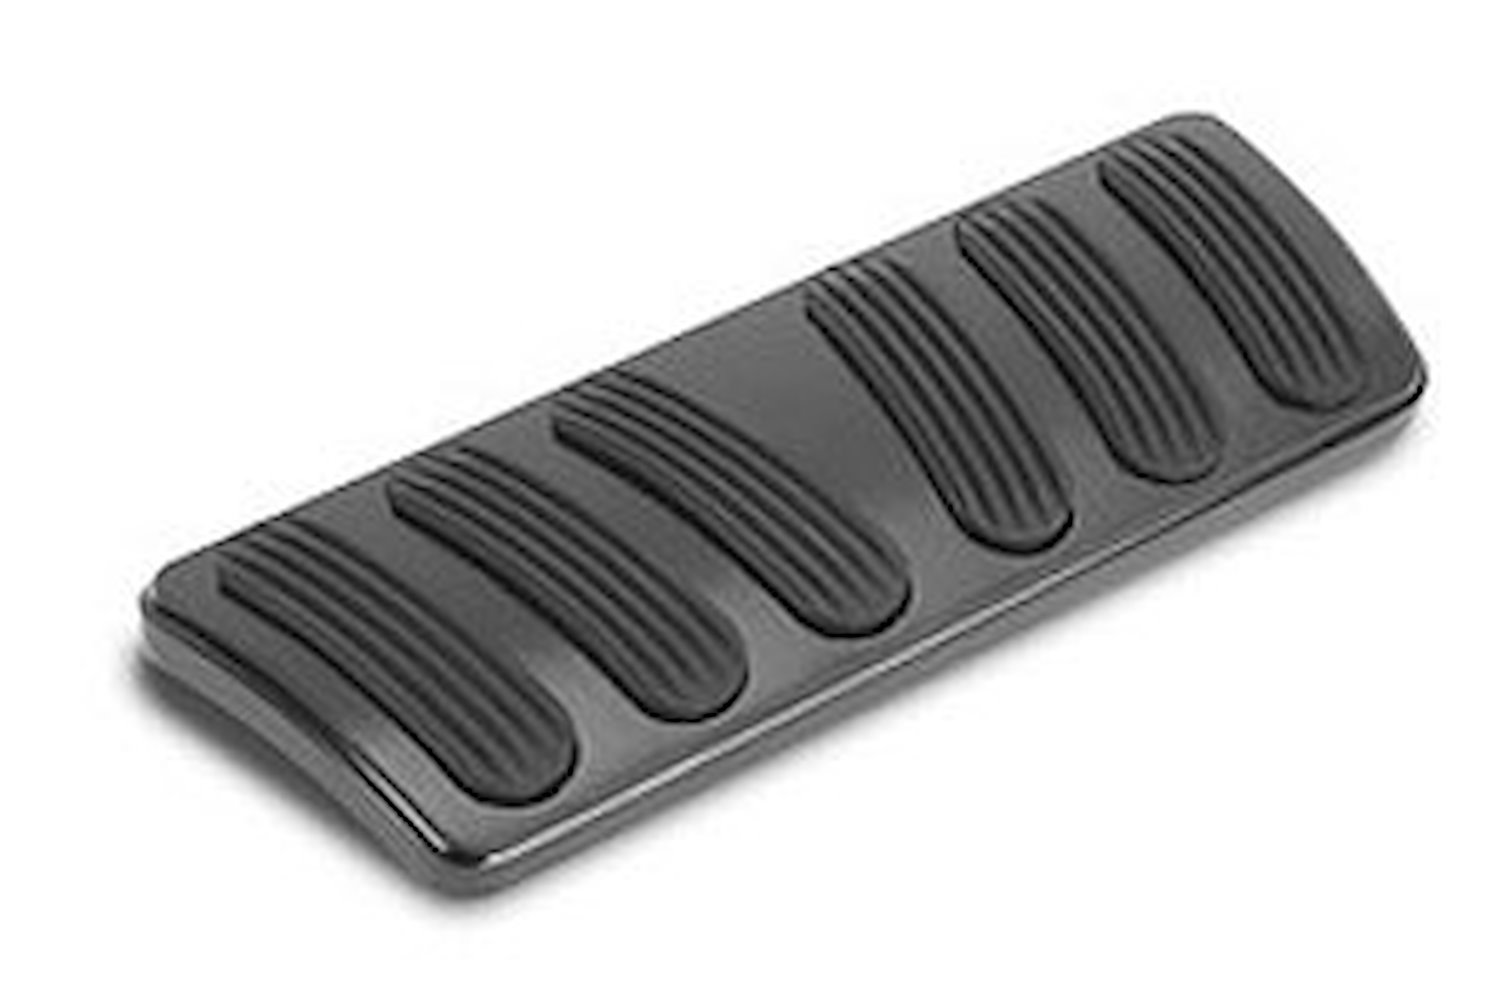 Billet Aluminum Curved Automatic Brake Pad Midnight Series Black w/Rubber Insert